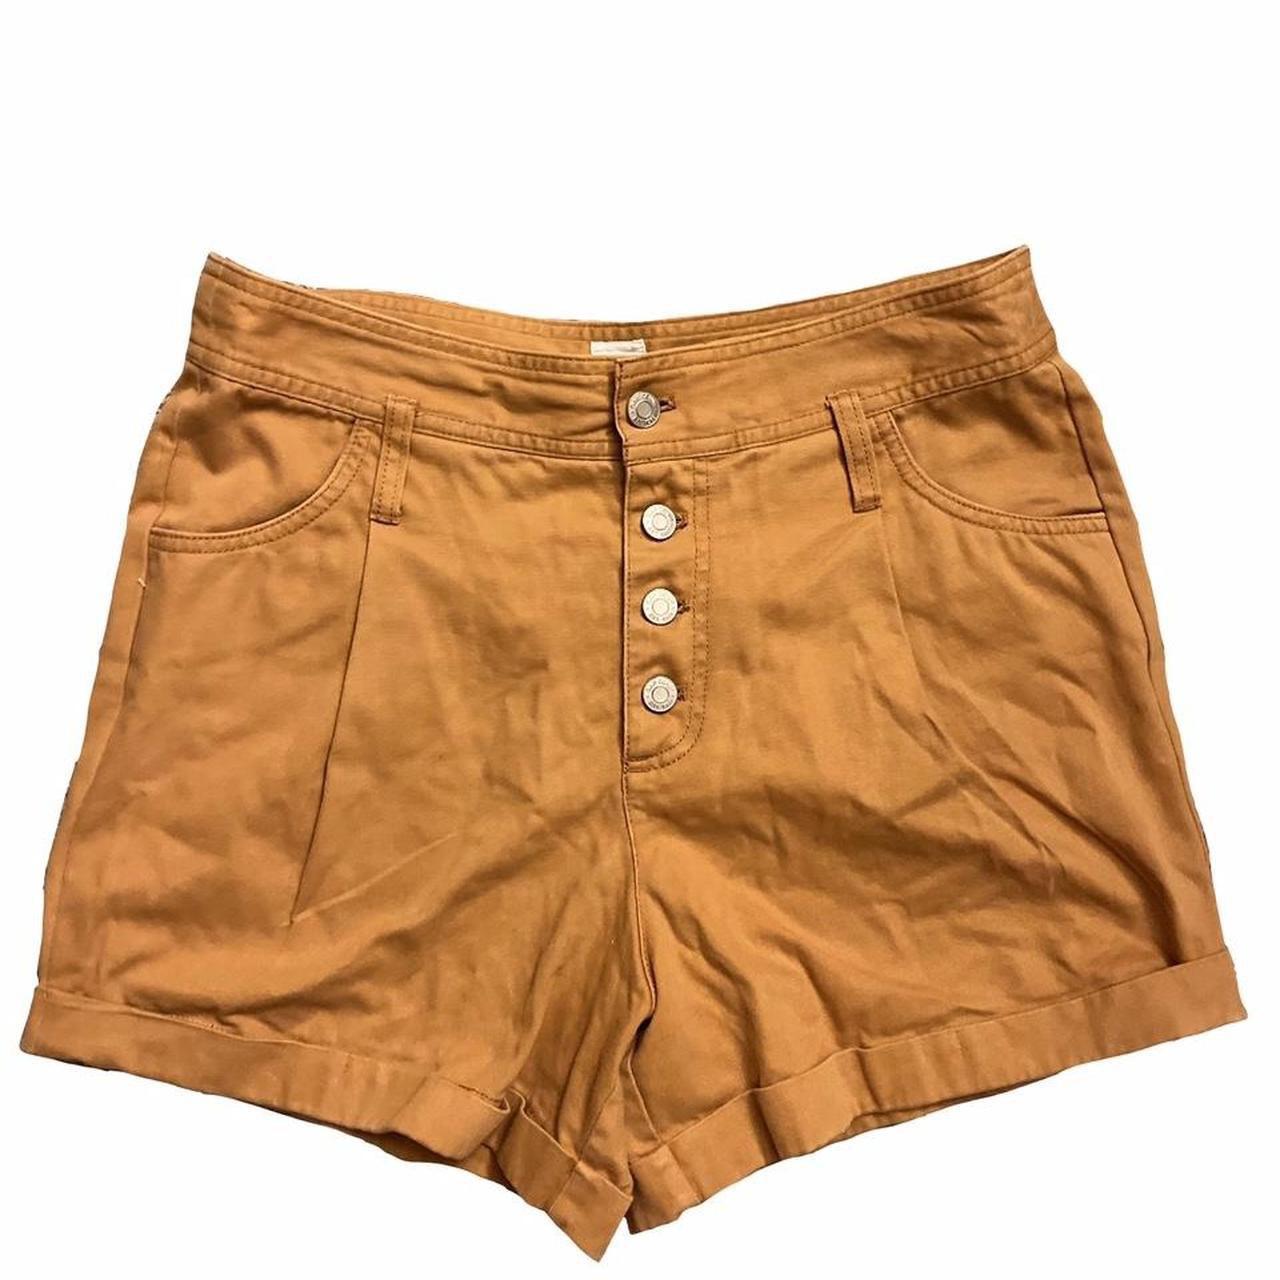 80s retro inspired tan high waisted shorts No - Depop